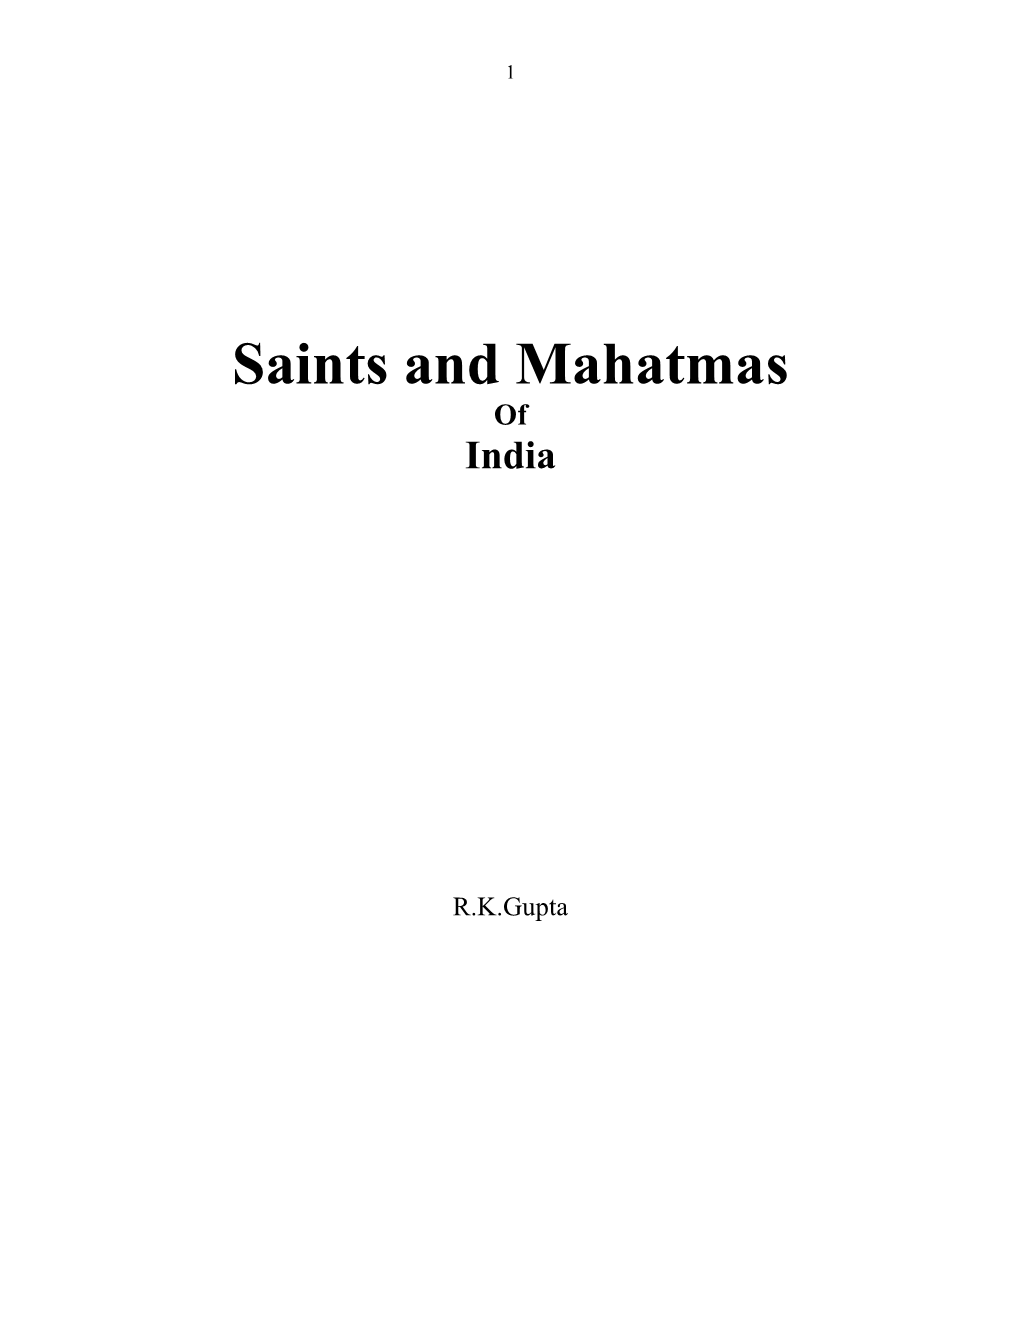 Saints and Mahatmas of India.Pdf